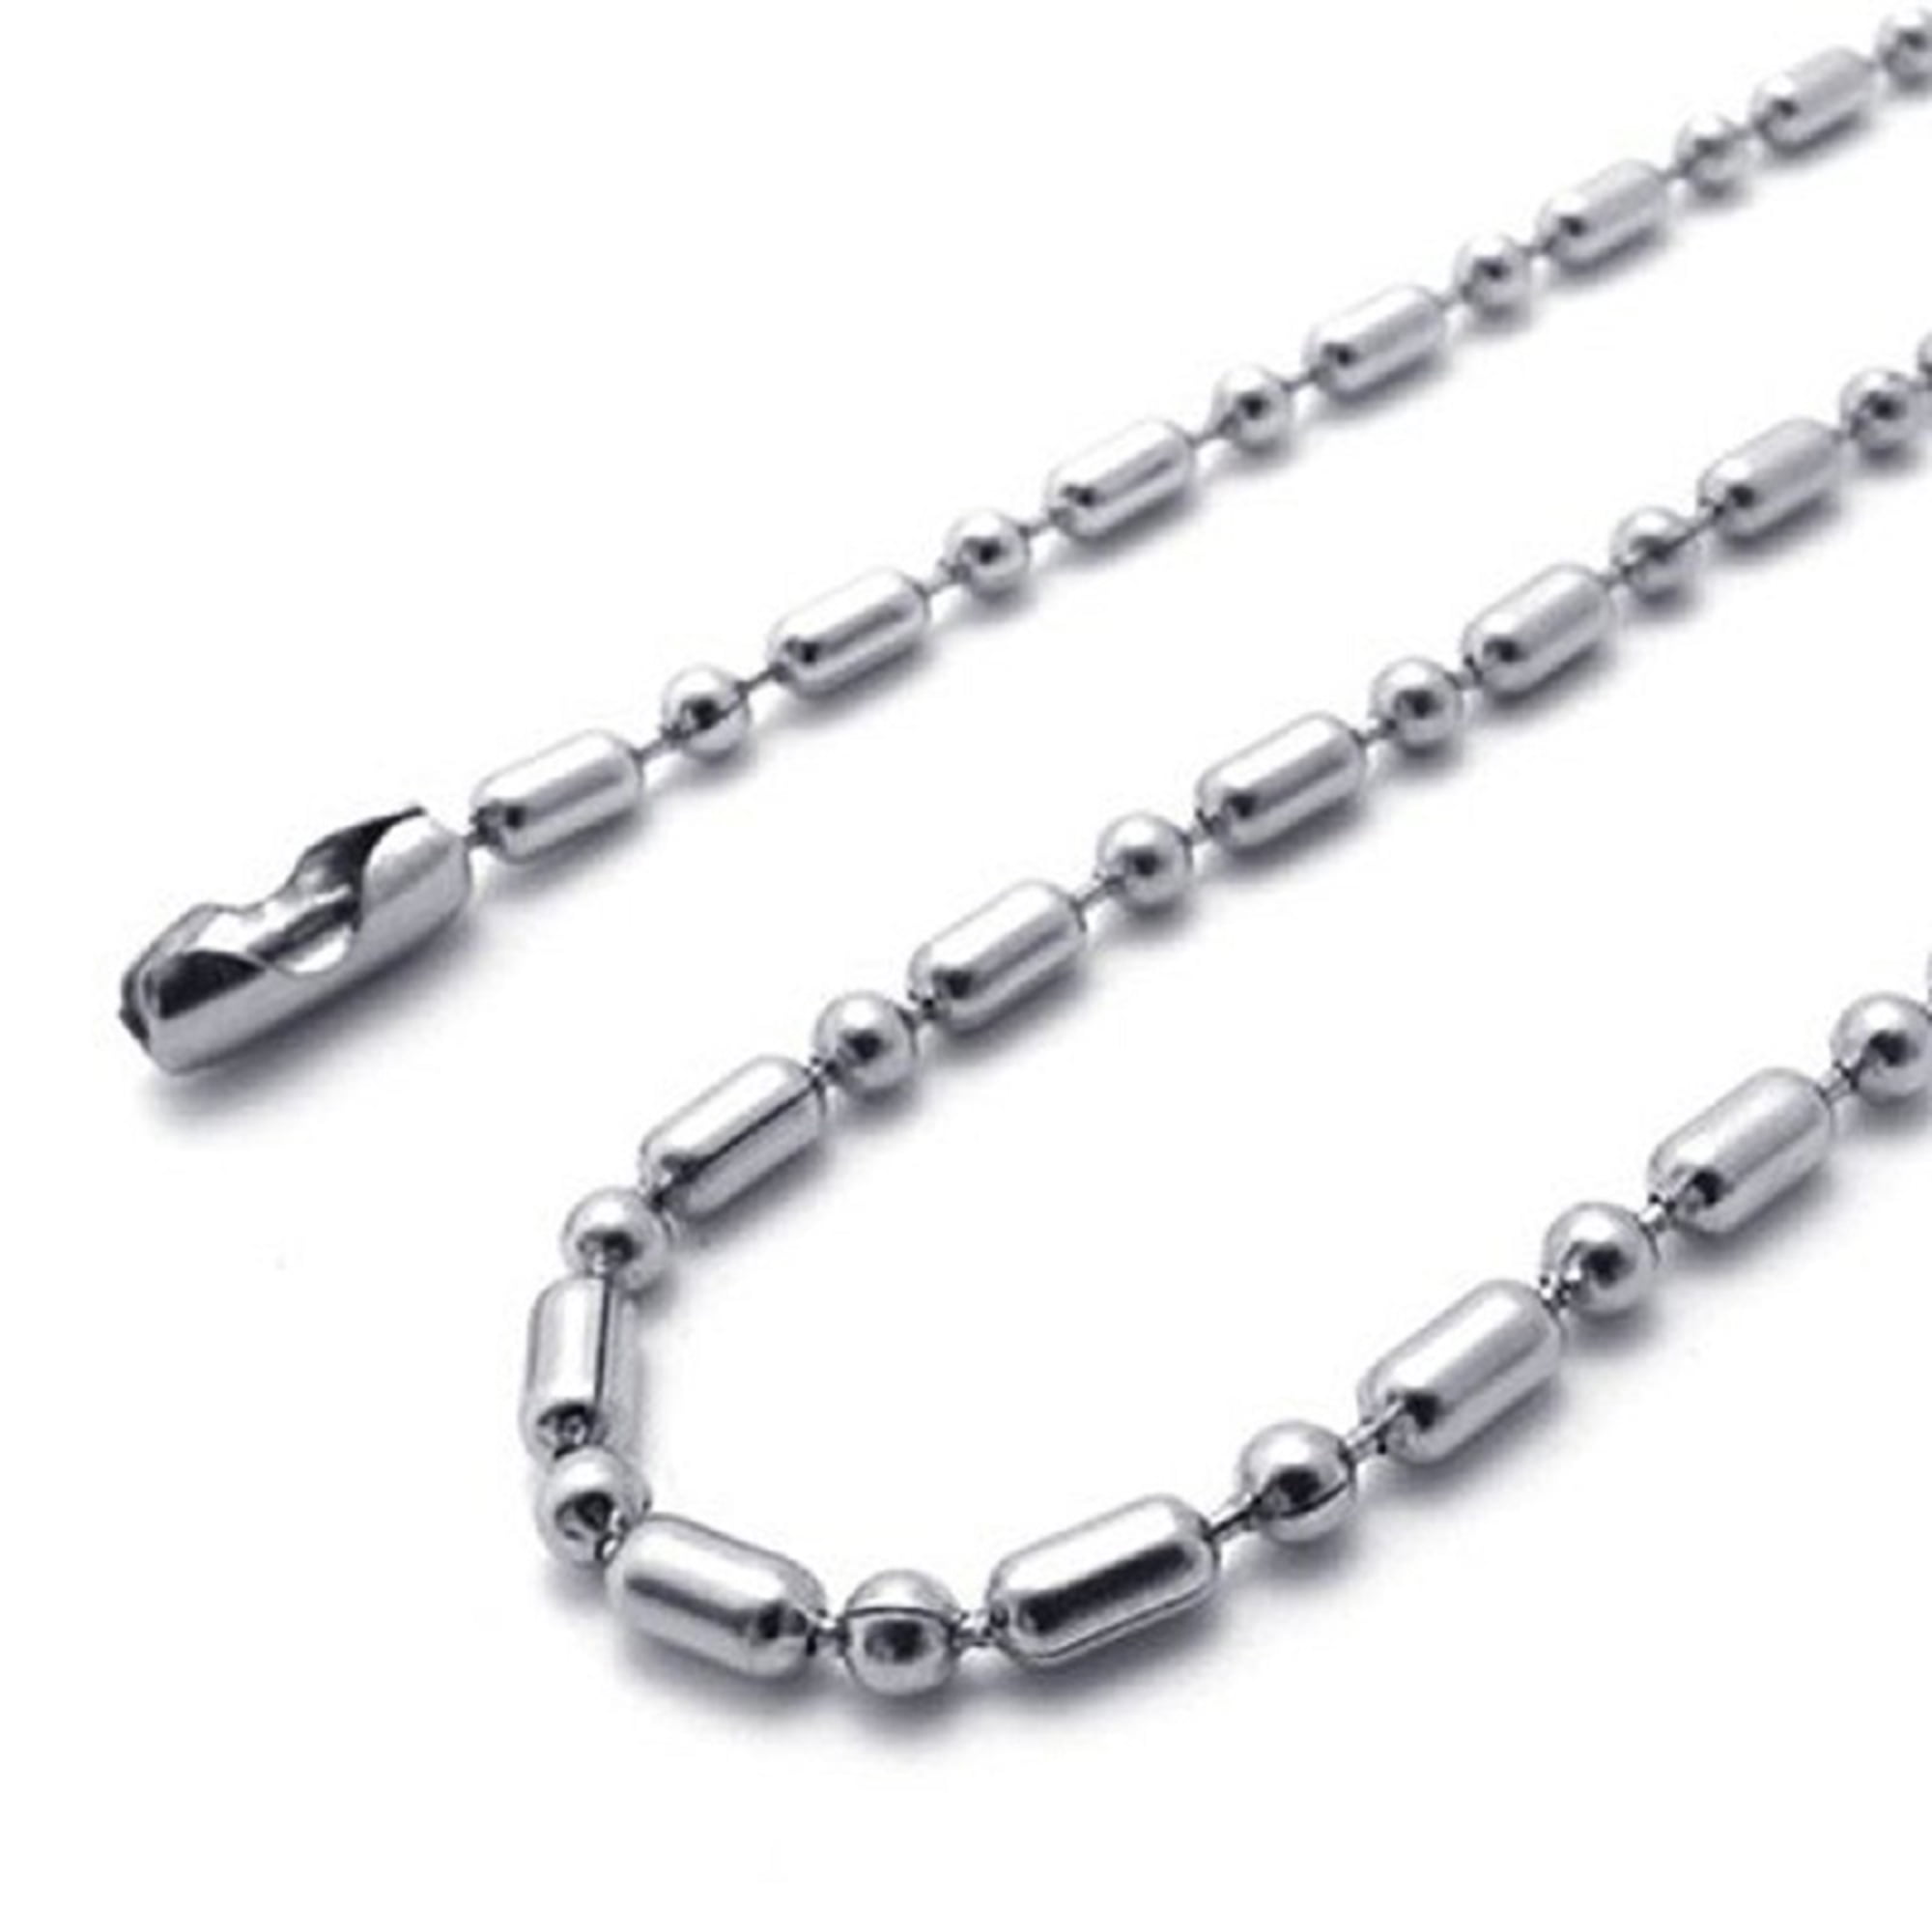 Black Silver Titanium Steel Ball Beads Chain Necklace Bead Connector Fashion P&C 